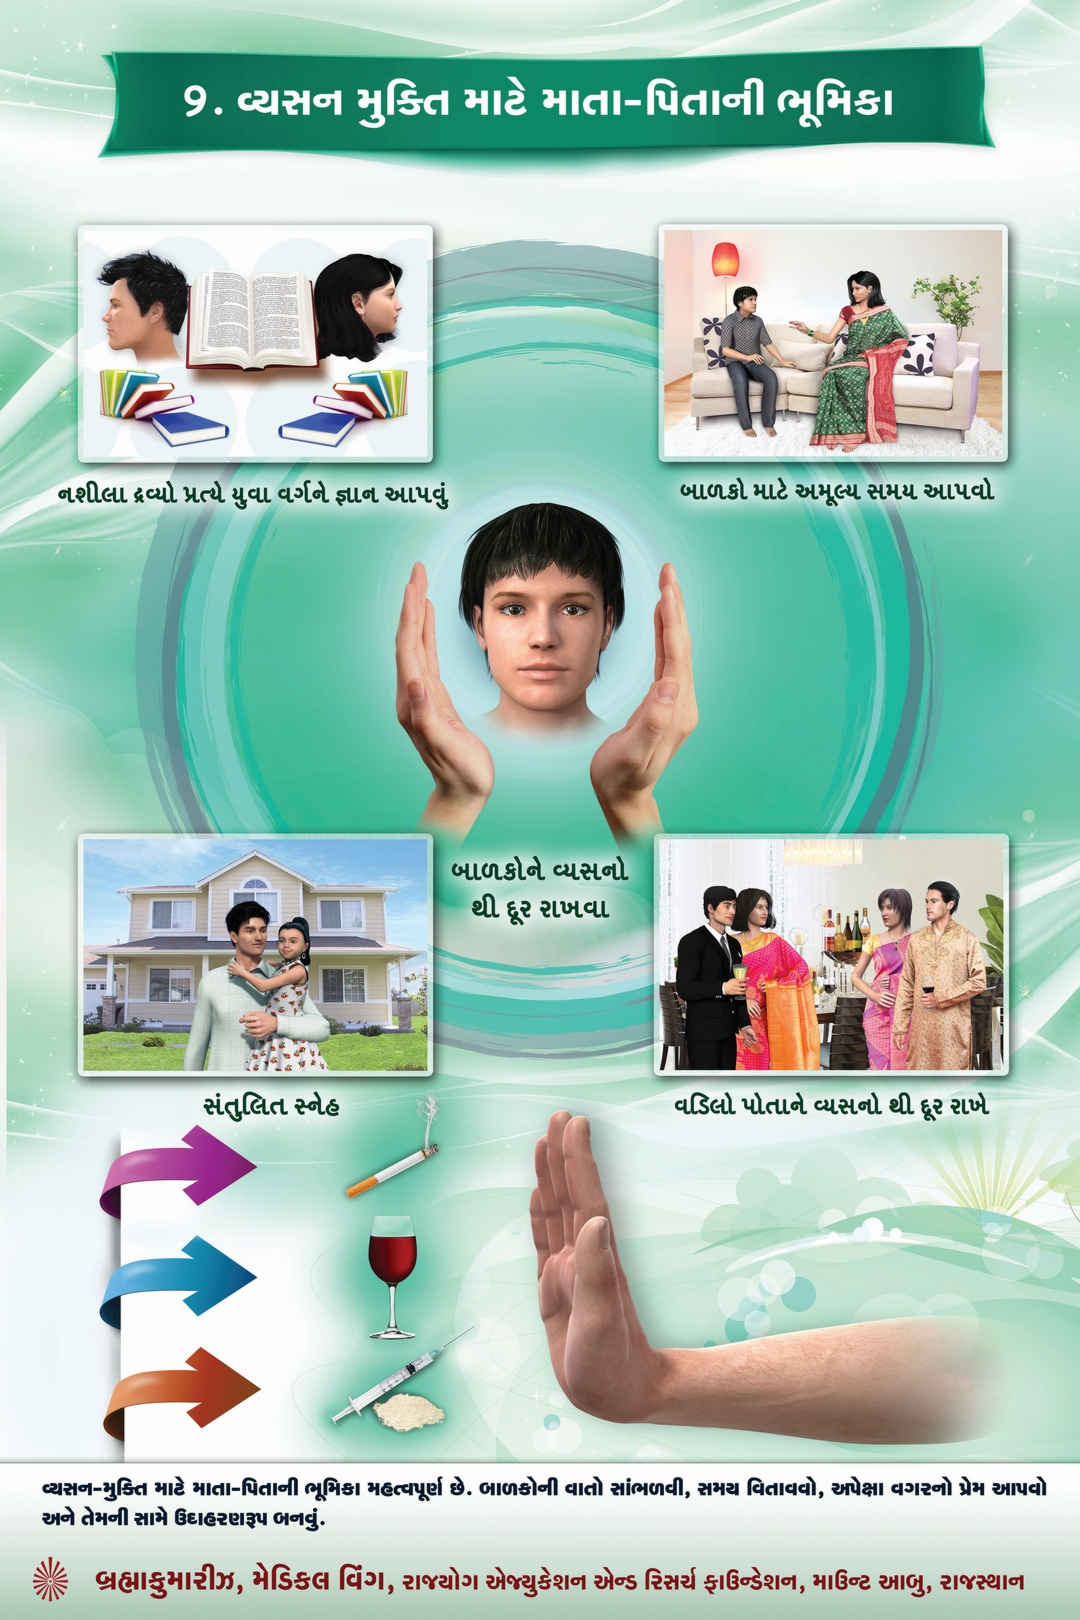 Drug de-addiction - role of parents (gujarati)